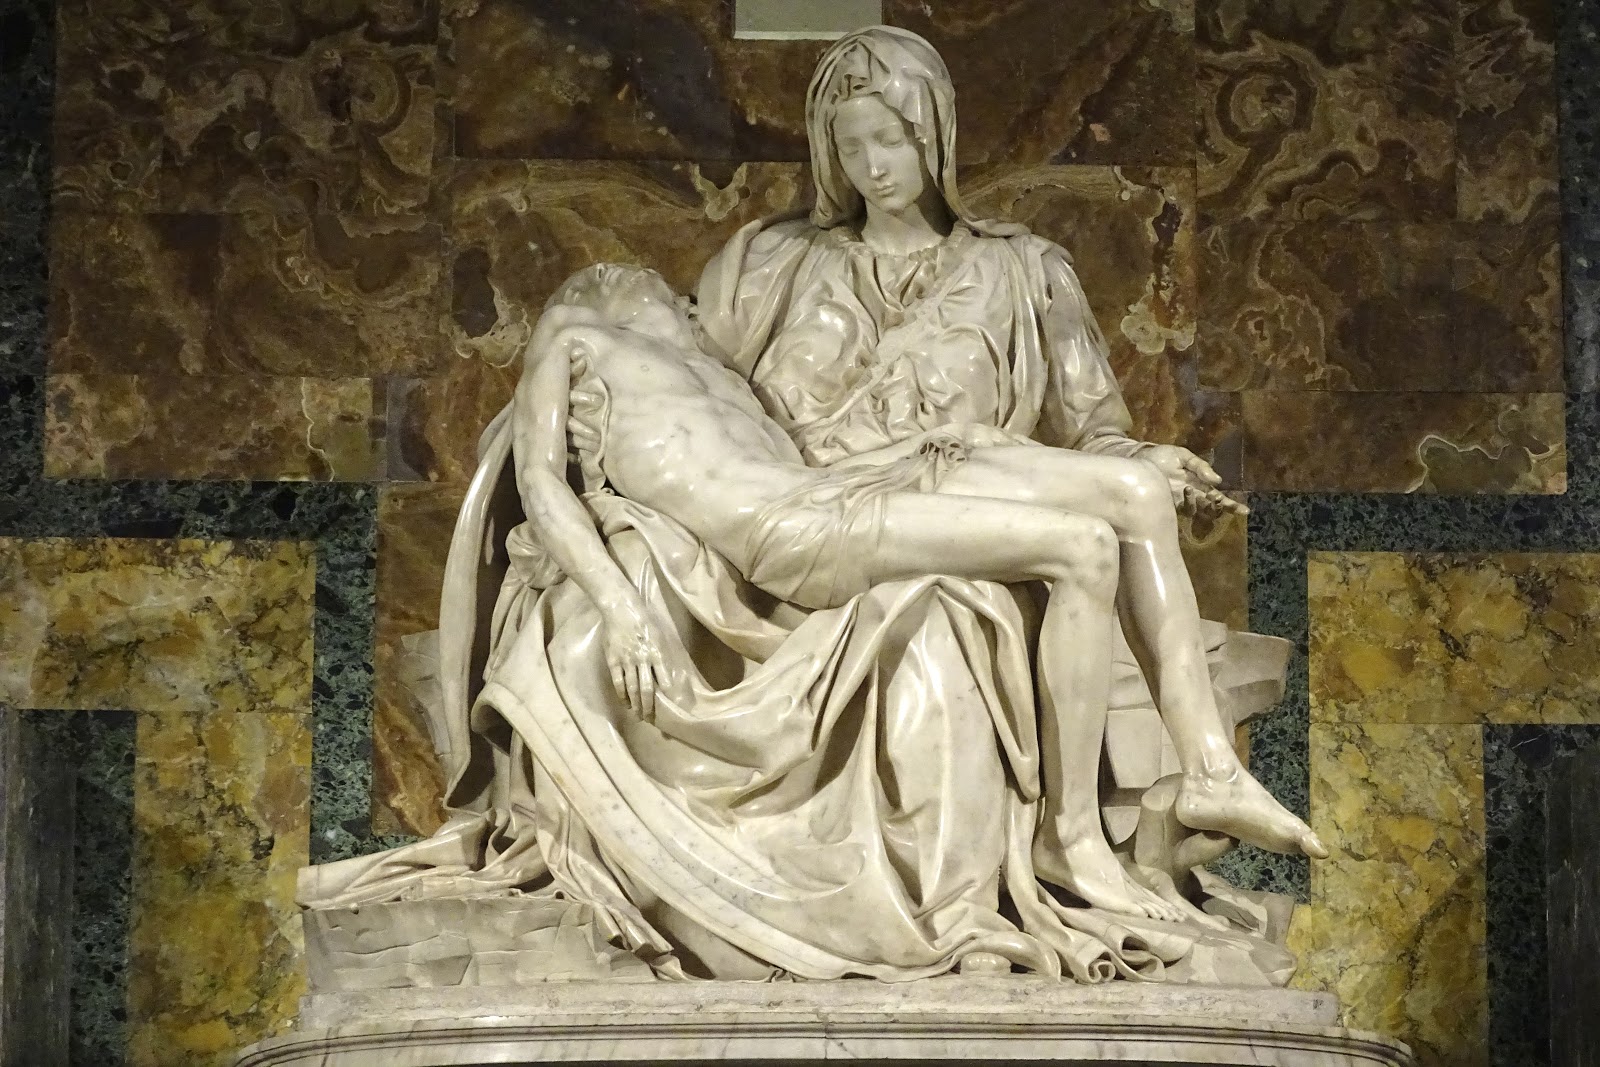 Michelangelo+Buonarroti-1475-1564 (430).jpg